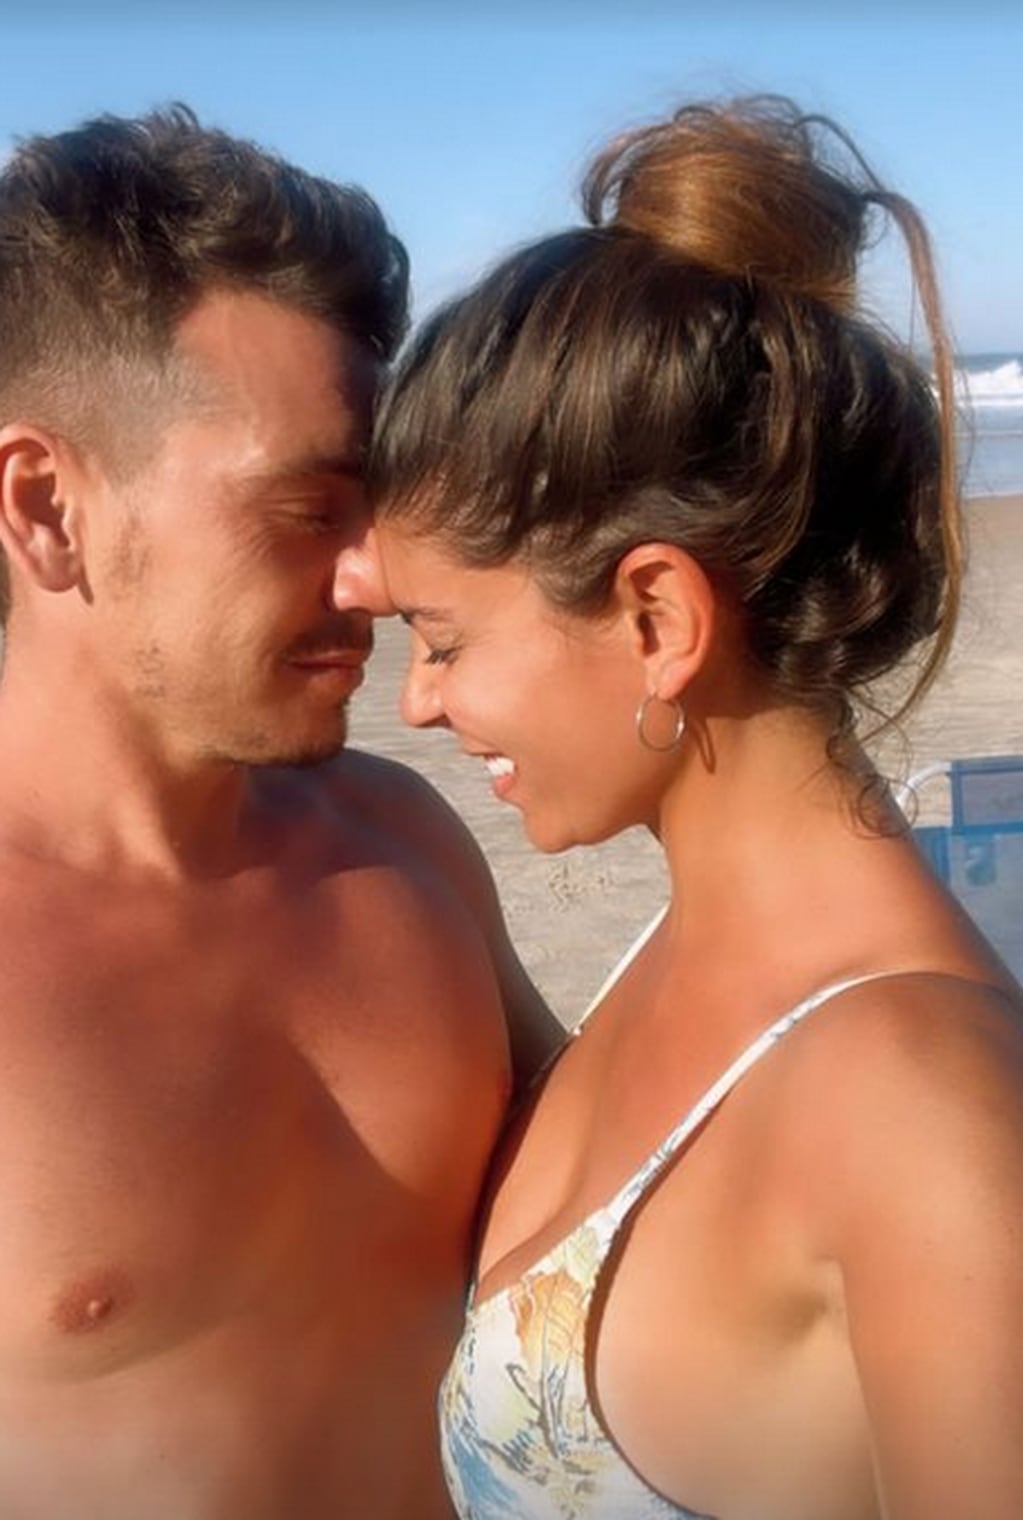 Ornella Ferrara junto a su pareja, en la playa.